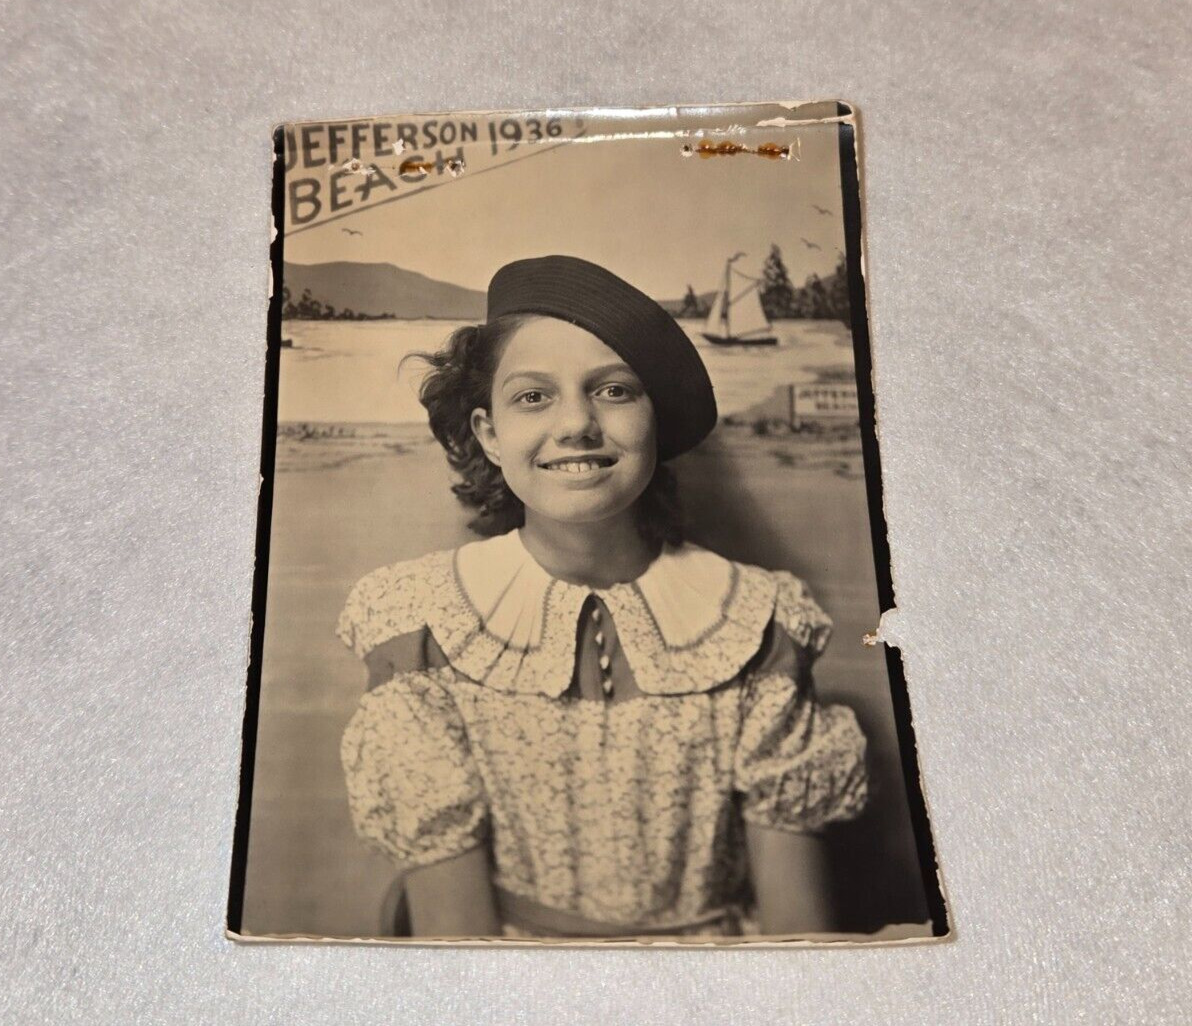 VINTAGE 1936 B&W CABINET PHOTO CUTE GIRL IN BERET JEFFERSON BEACH MICHIGAN